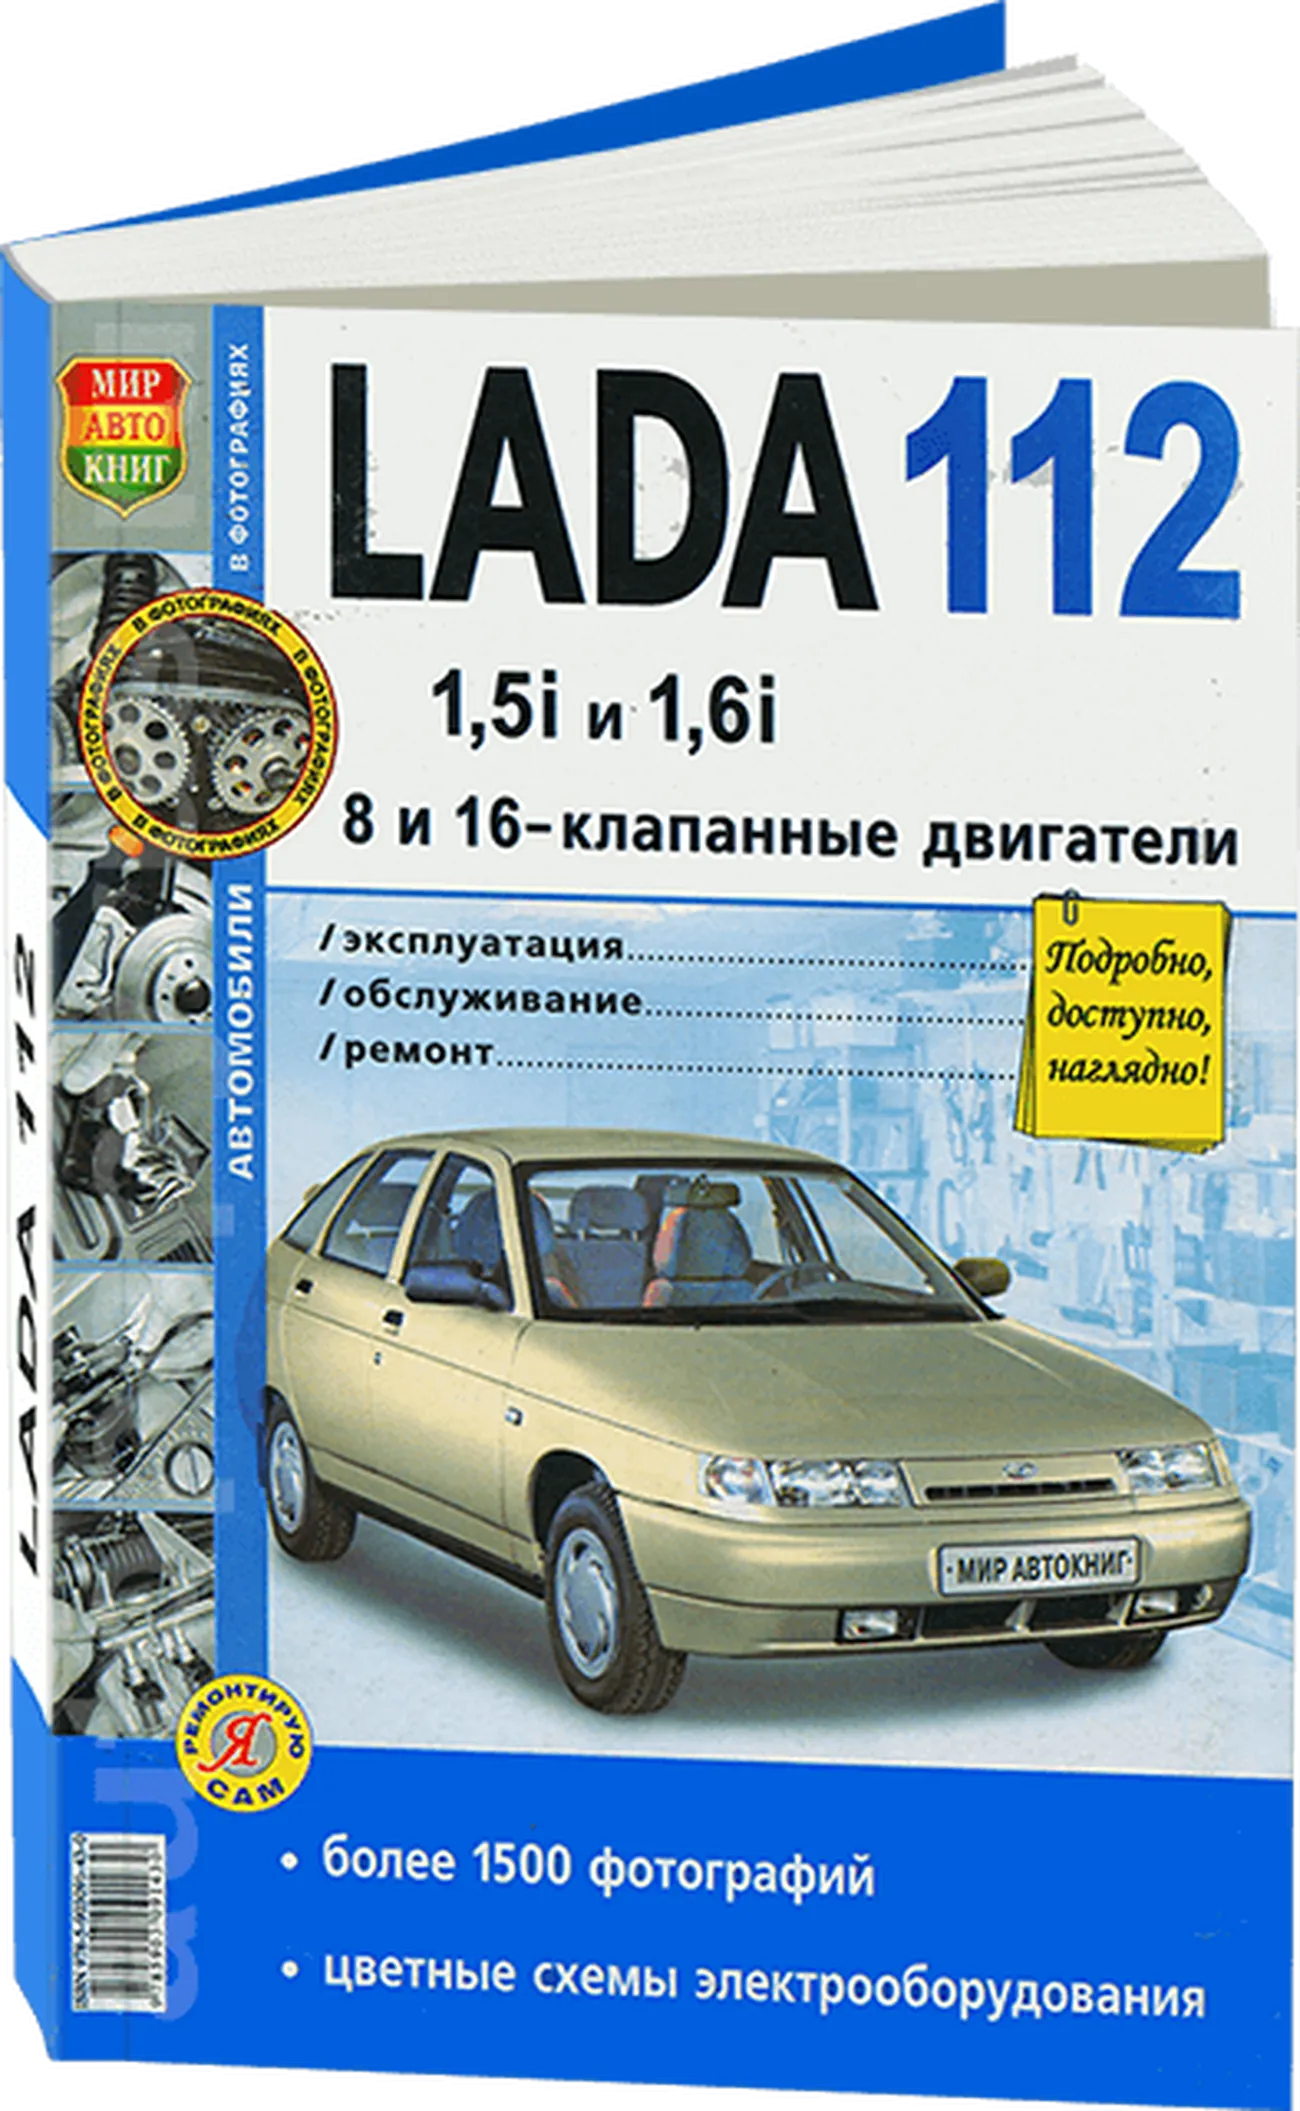 Книга: LADA 112 (ВАЗ 2112) (б) рем., экспл., то | Мир Автокниг